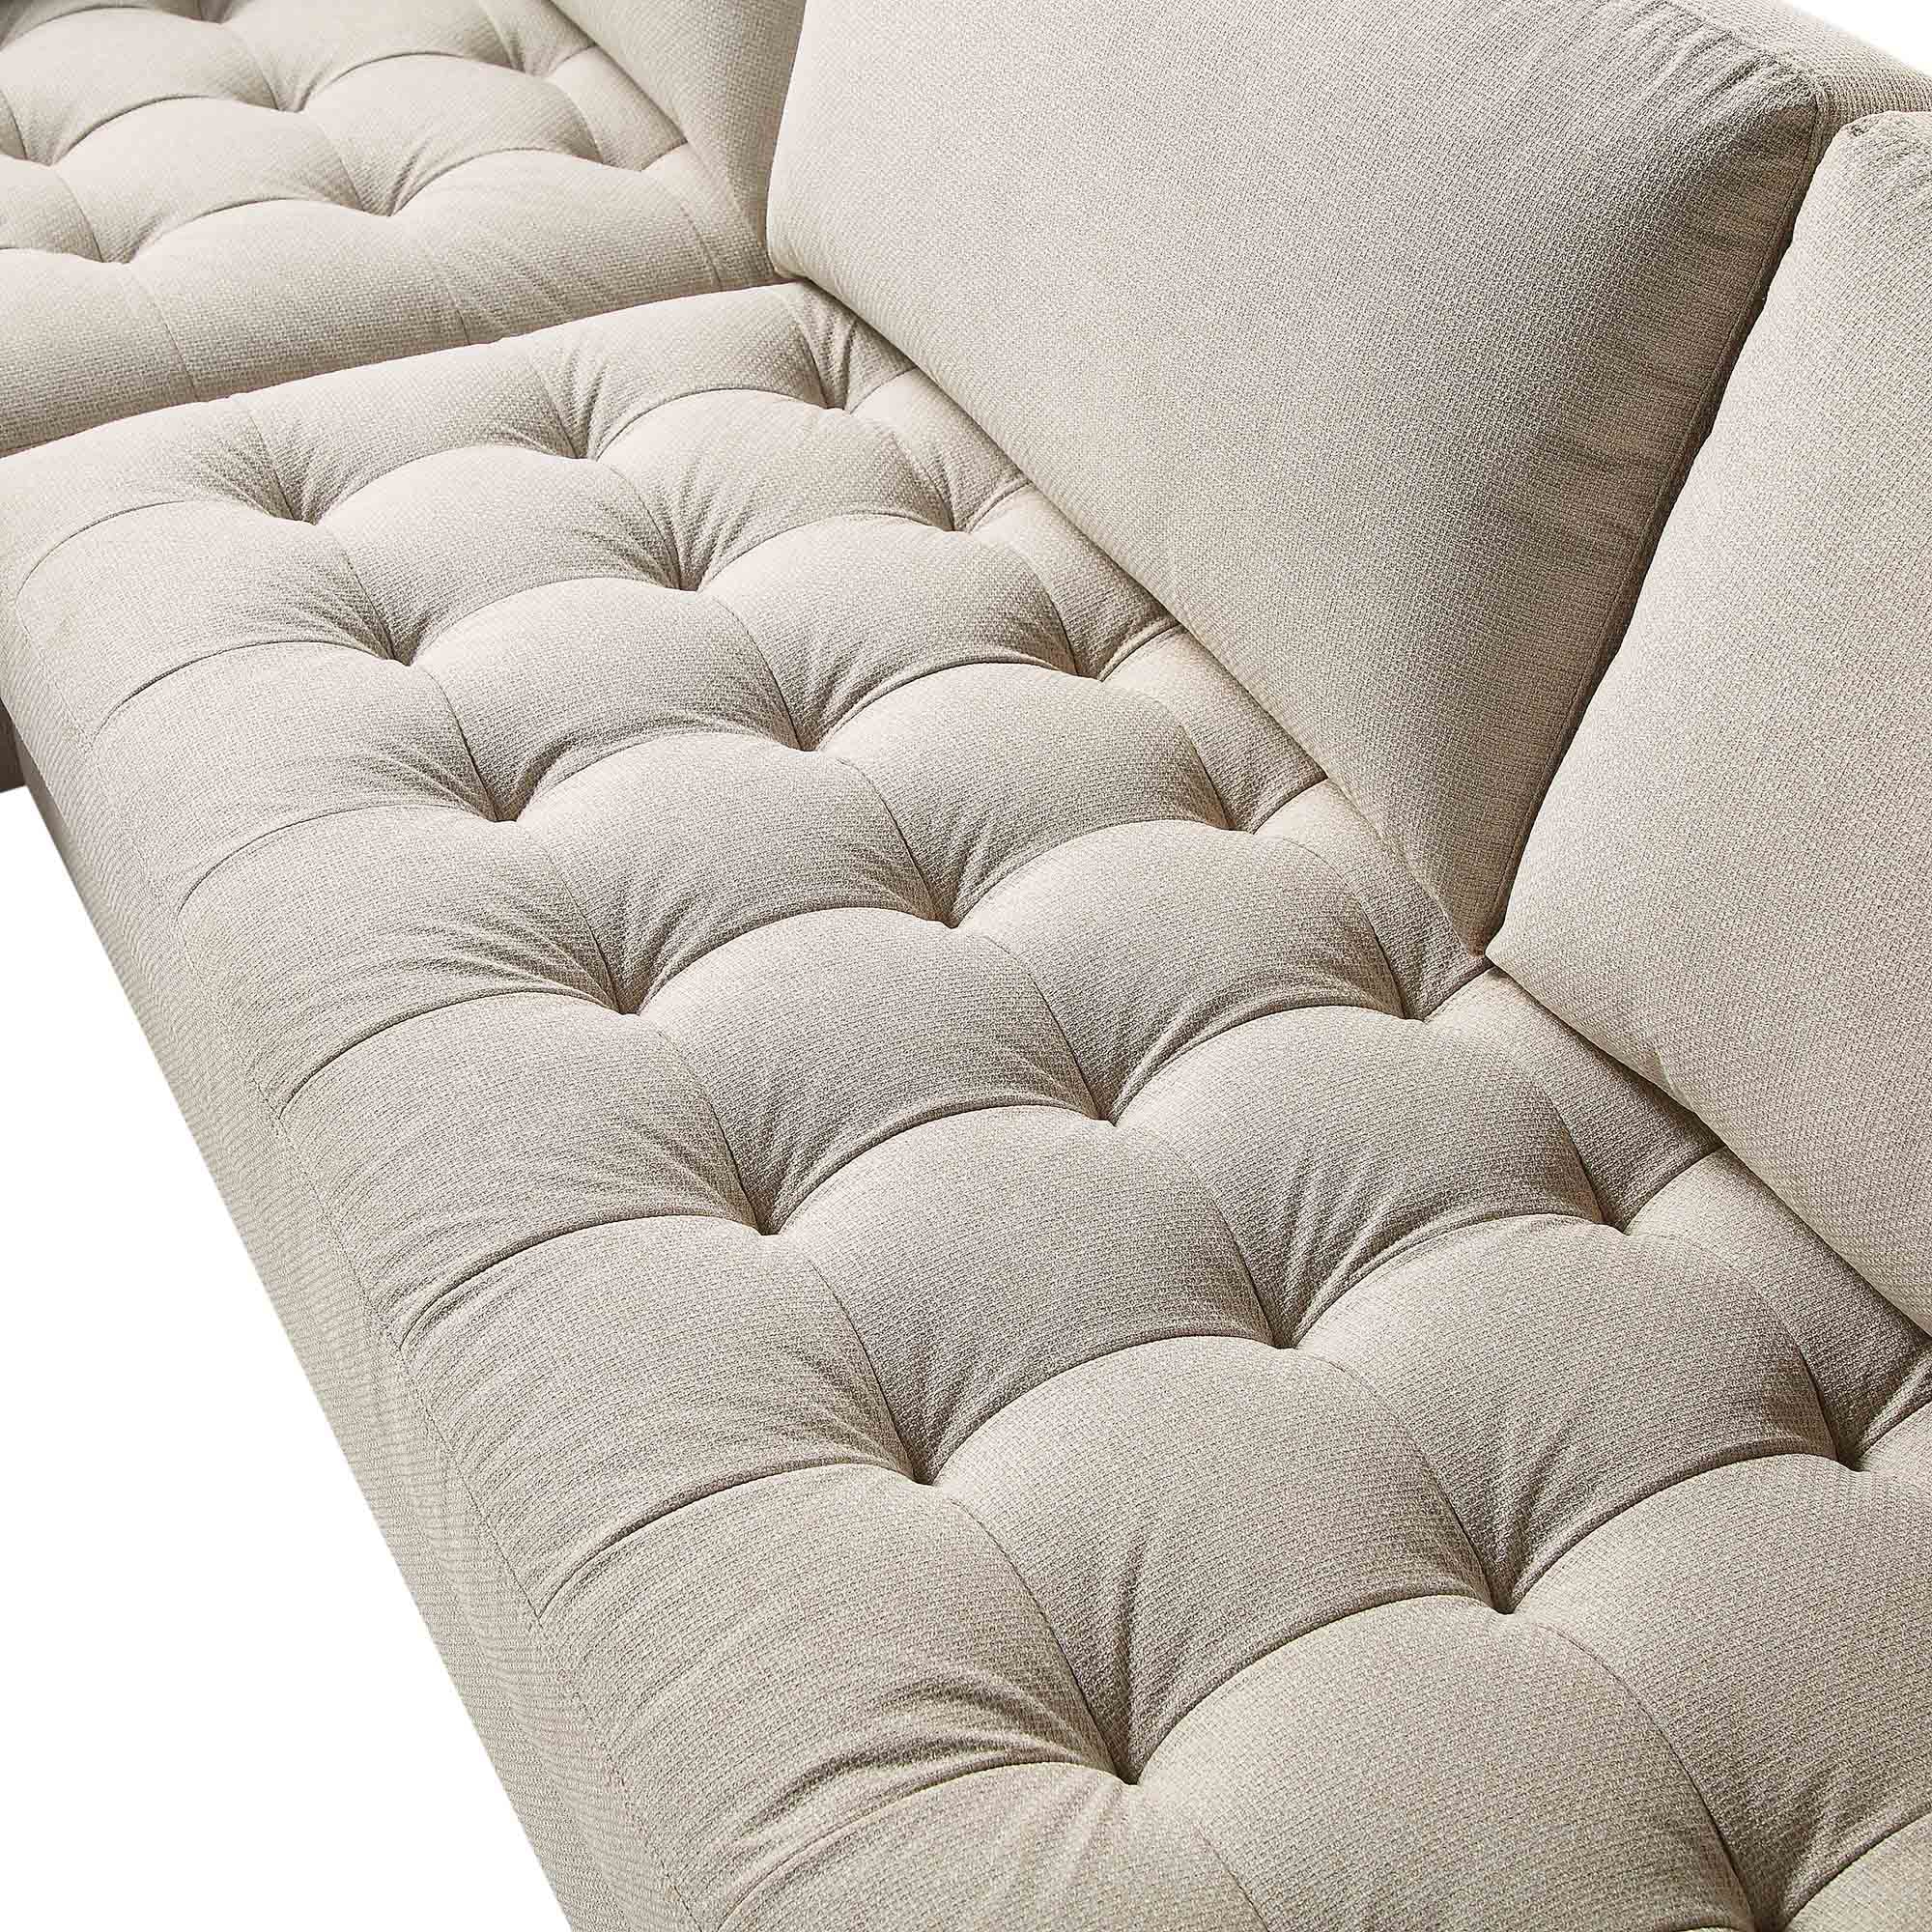 Henrietta Grand 4-Seater RHF Chaise End Sofa, Beige Woven Fabric